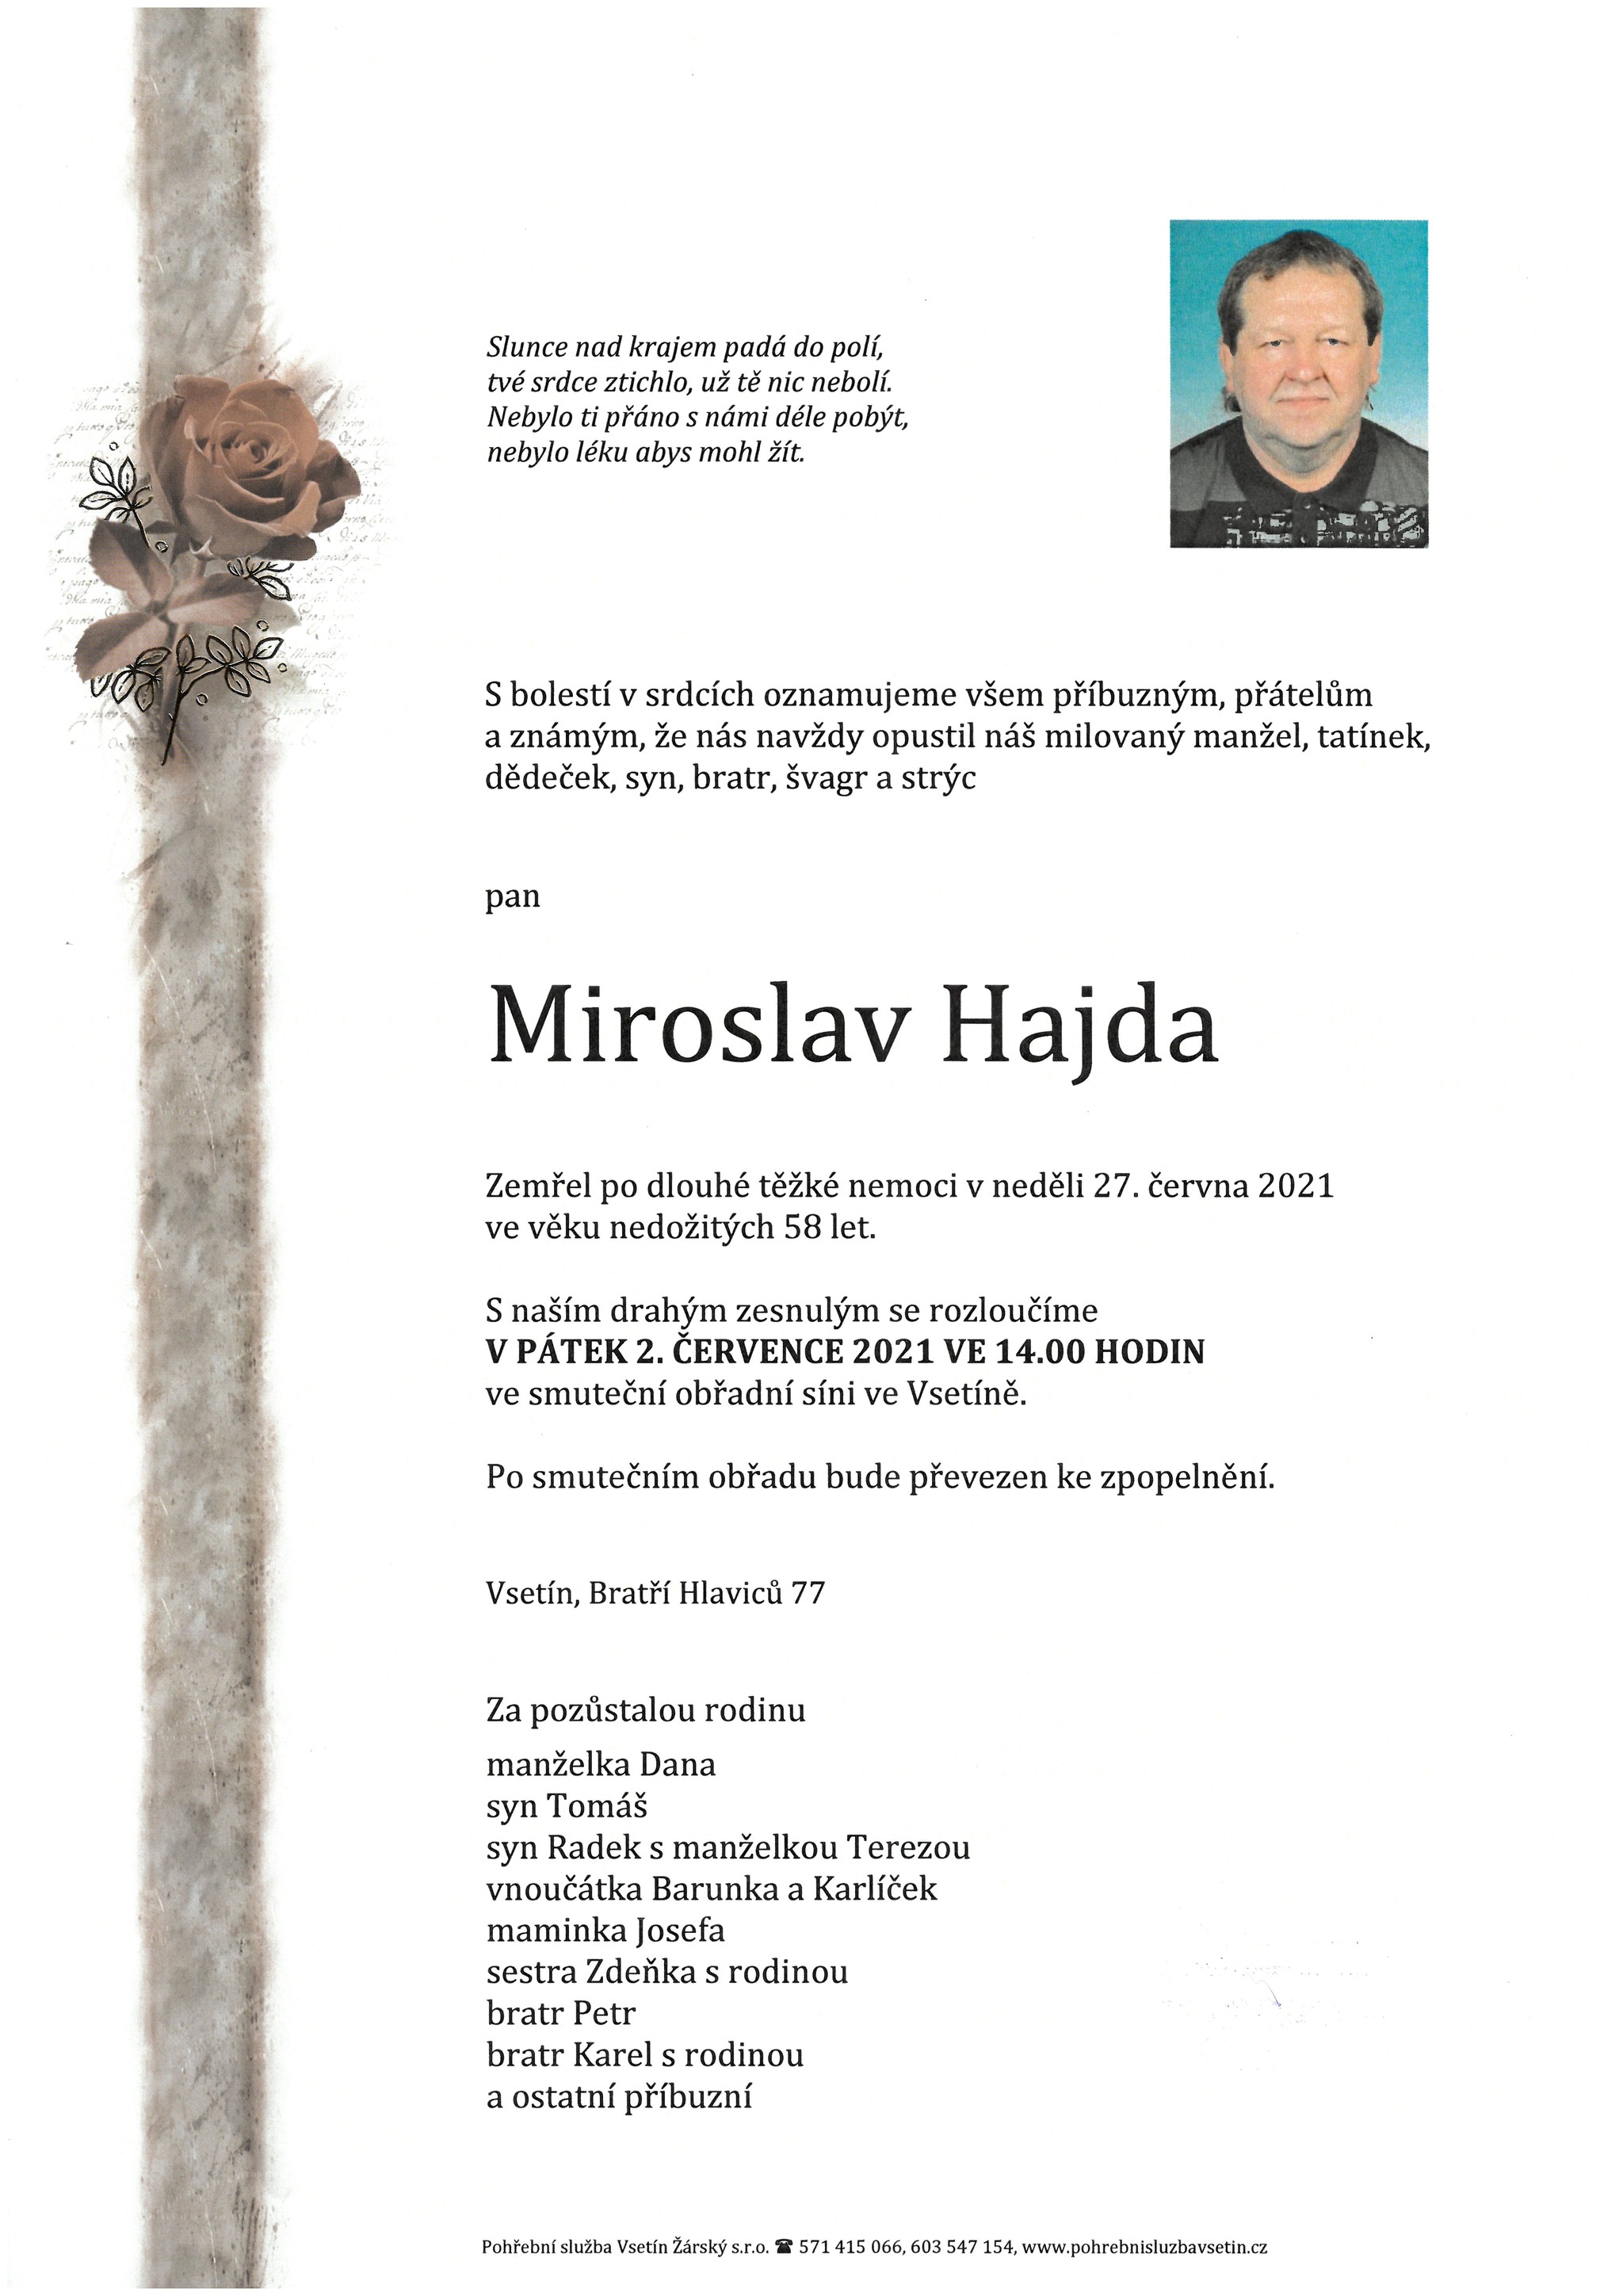 Miroslav Hajda